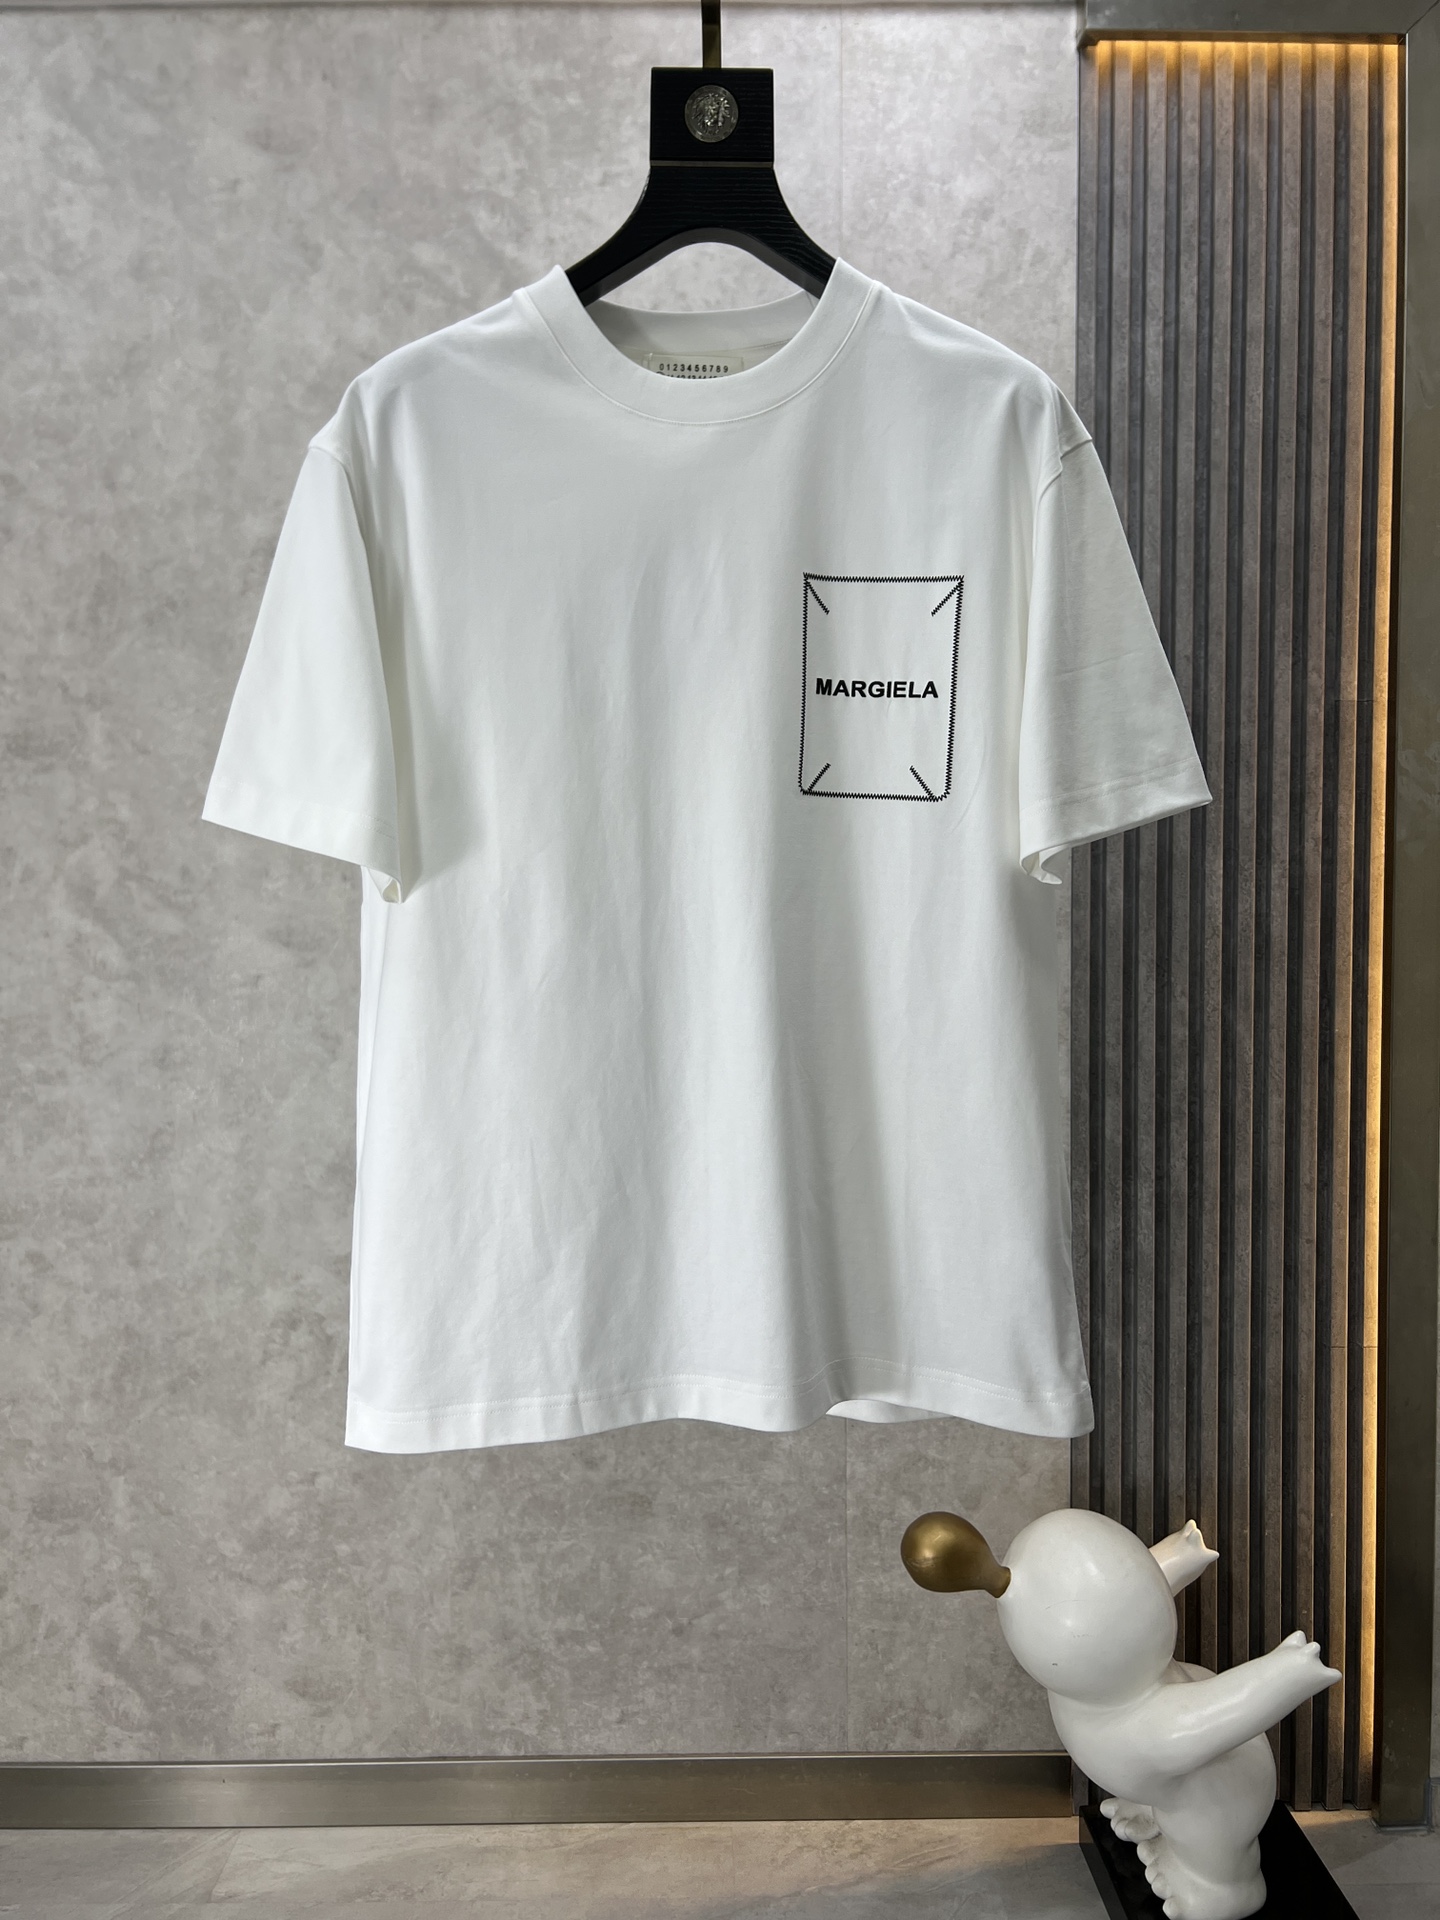 MM62024Ss最新款短袖T恤原标定制面料手感柔软穿着舒适做工精细.上身效果无敌帅气L码数S-2xl